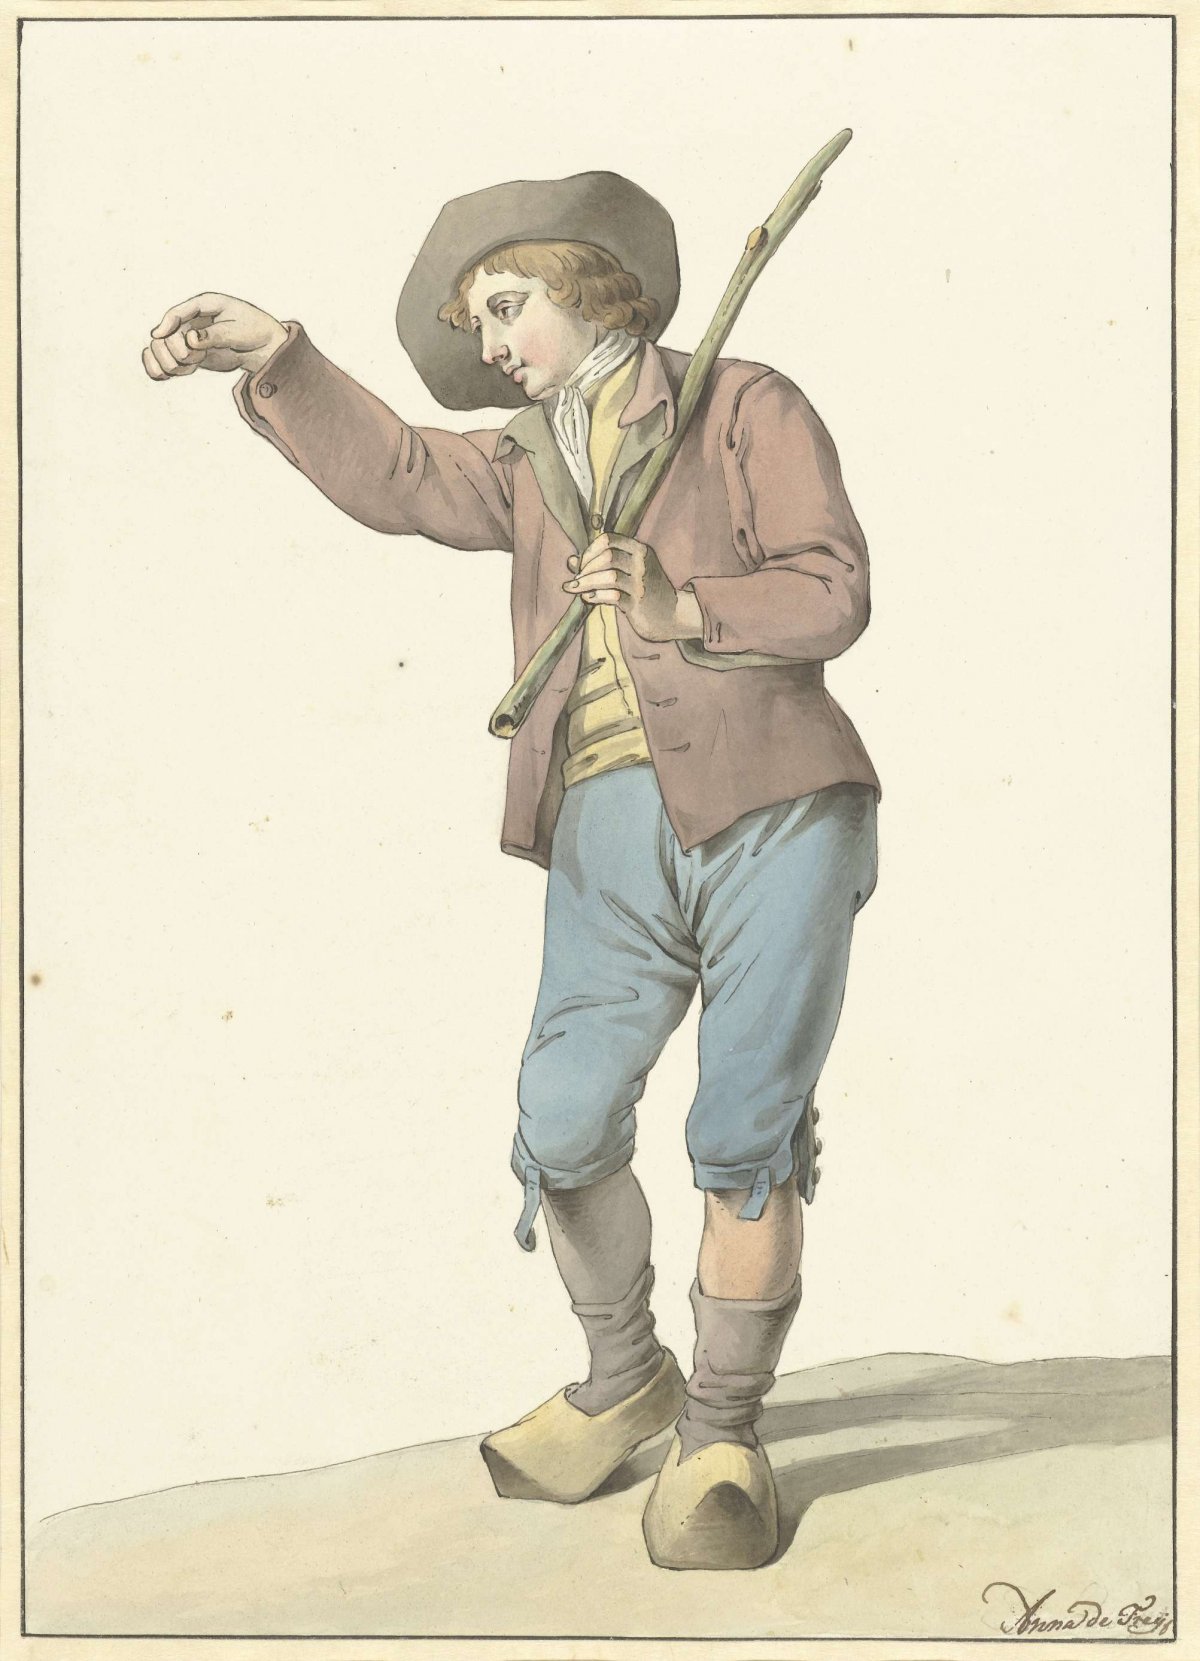 Peasant boy pointing with right hand, Aletta de Freij, 1778 - 1808